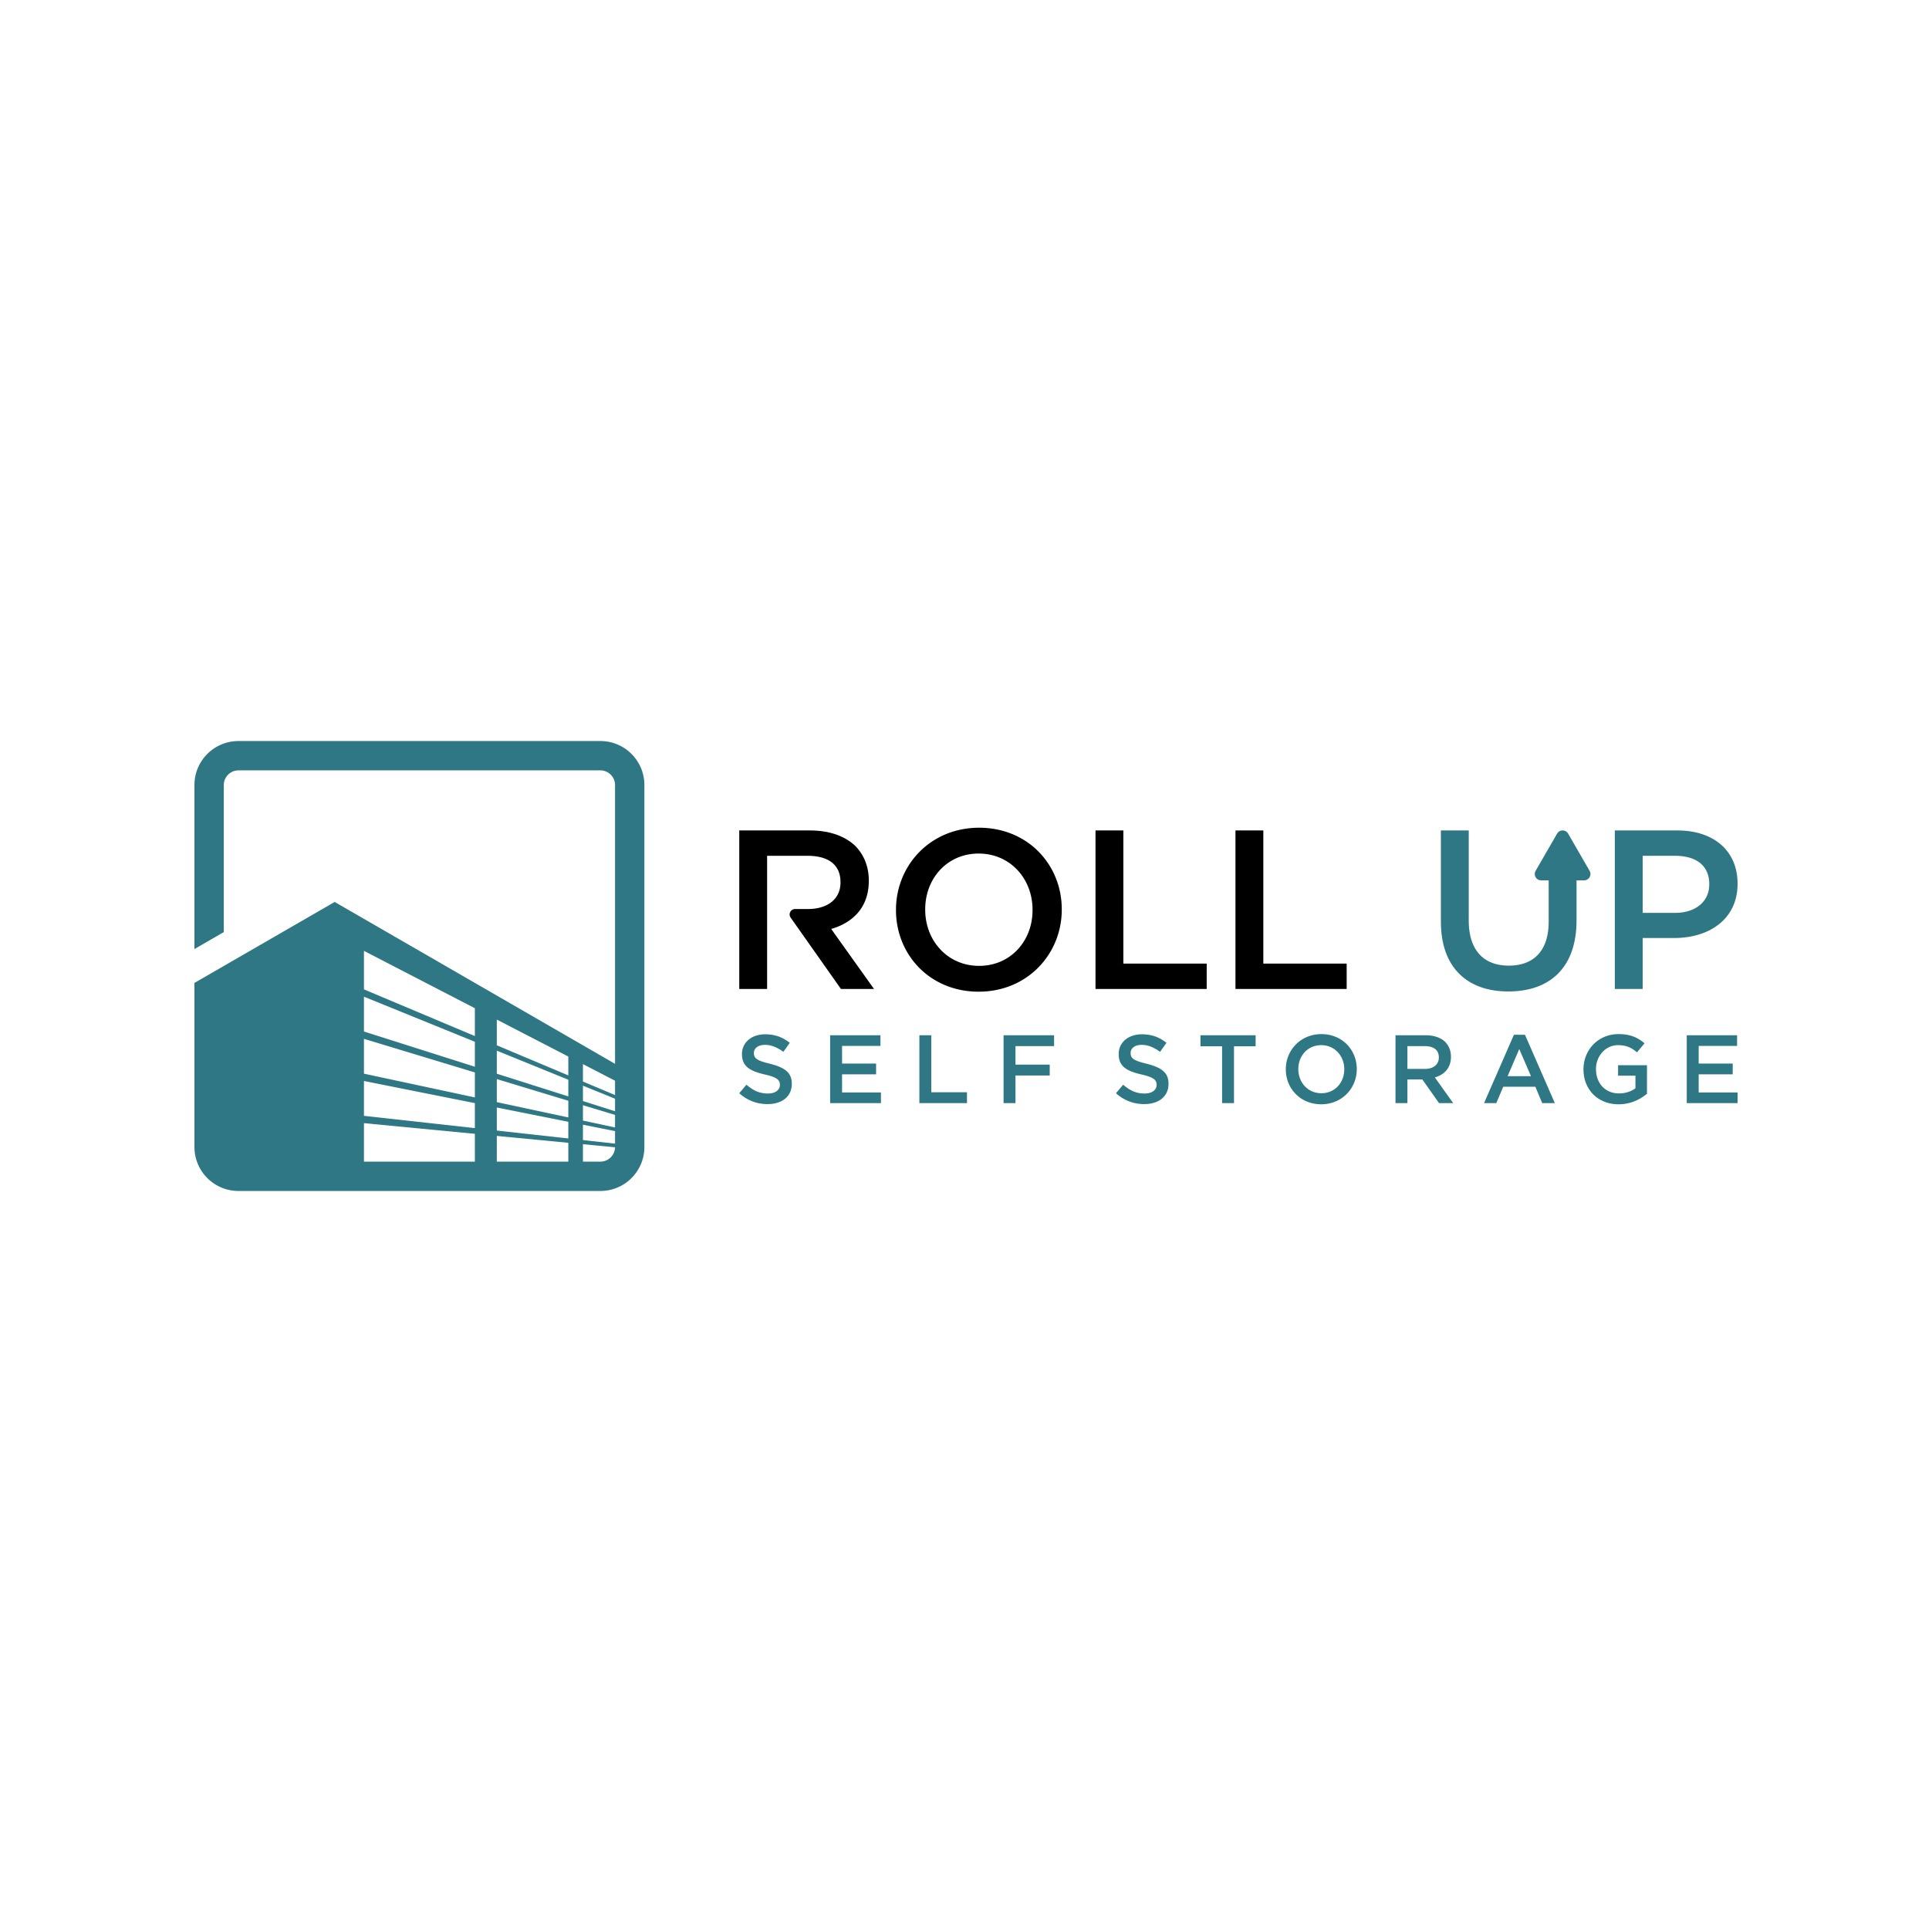 Roll Up Self Storage